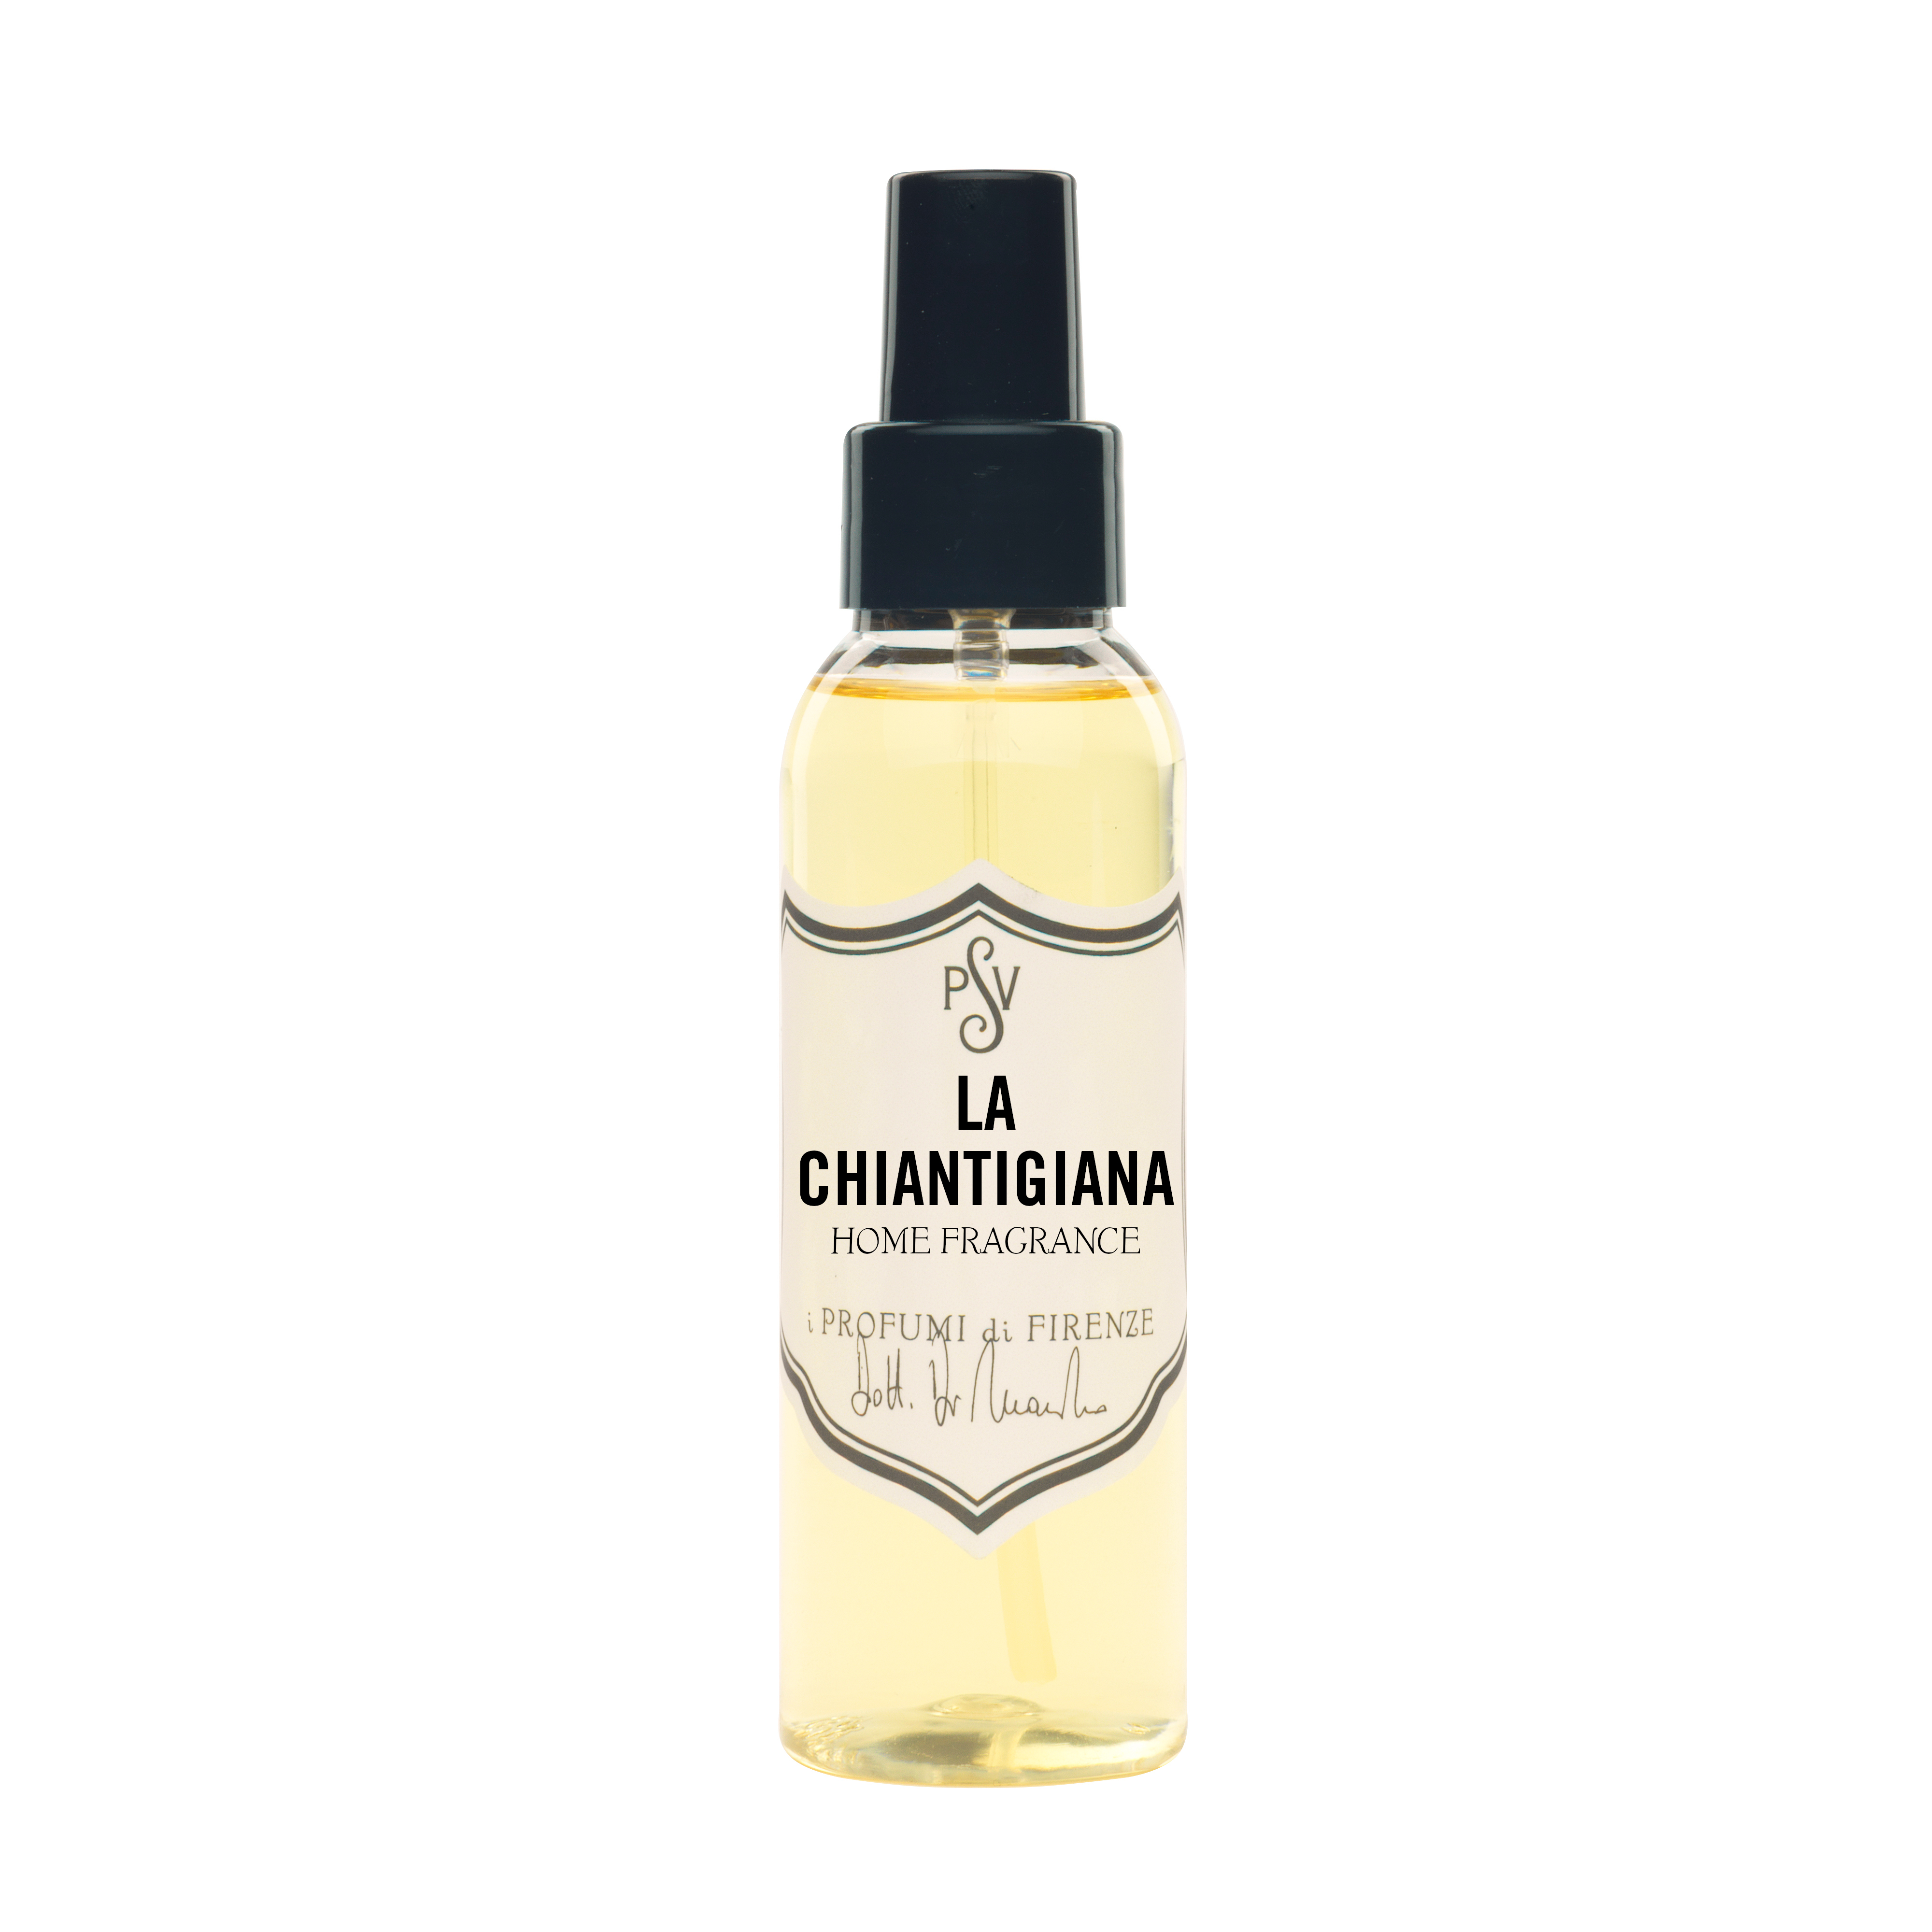 LA CHIANTIGIANA 100ml - Home Fragrance Spray-0